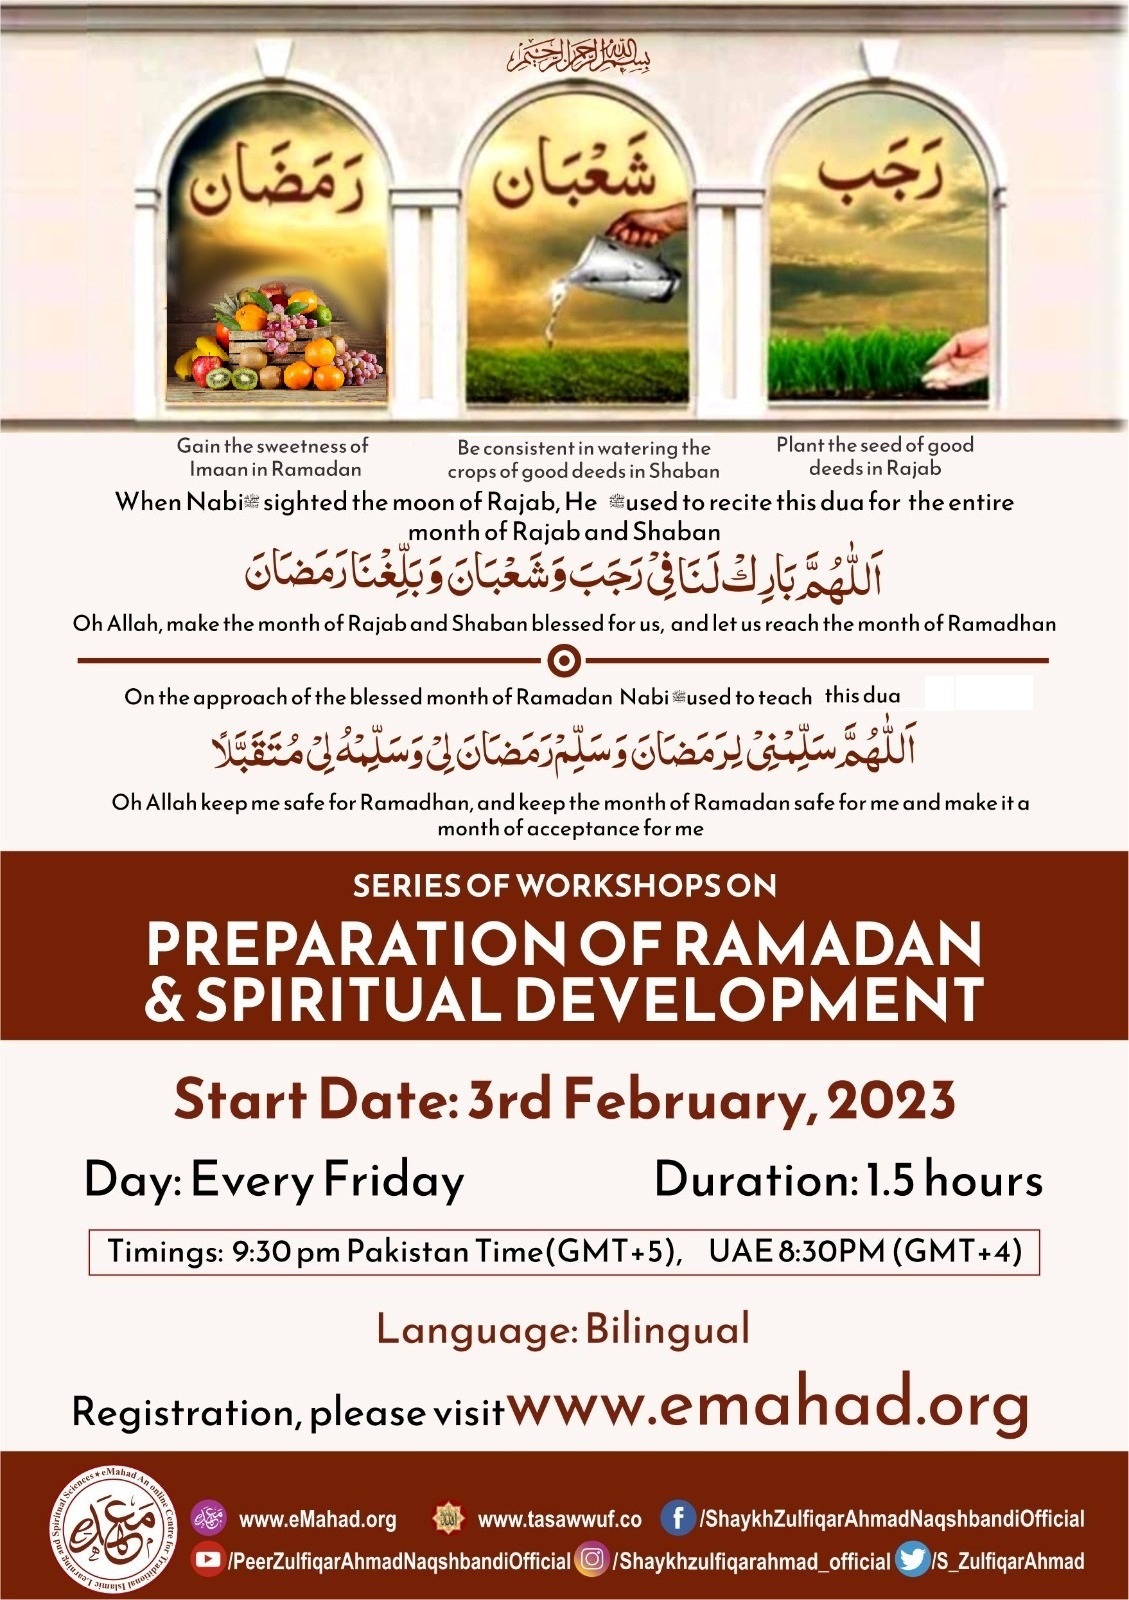 Series of Workshops On Preparation of Ramadan & Spiritual Development